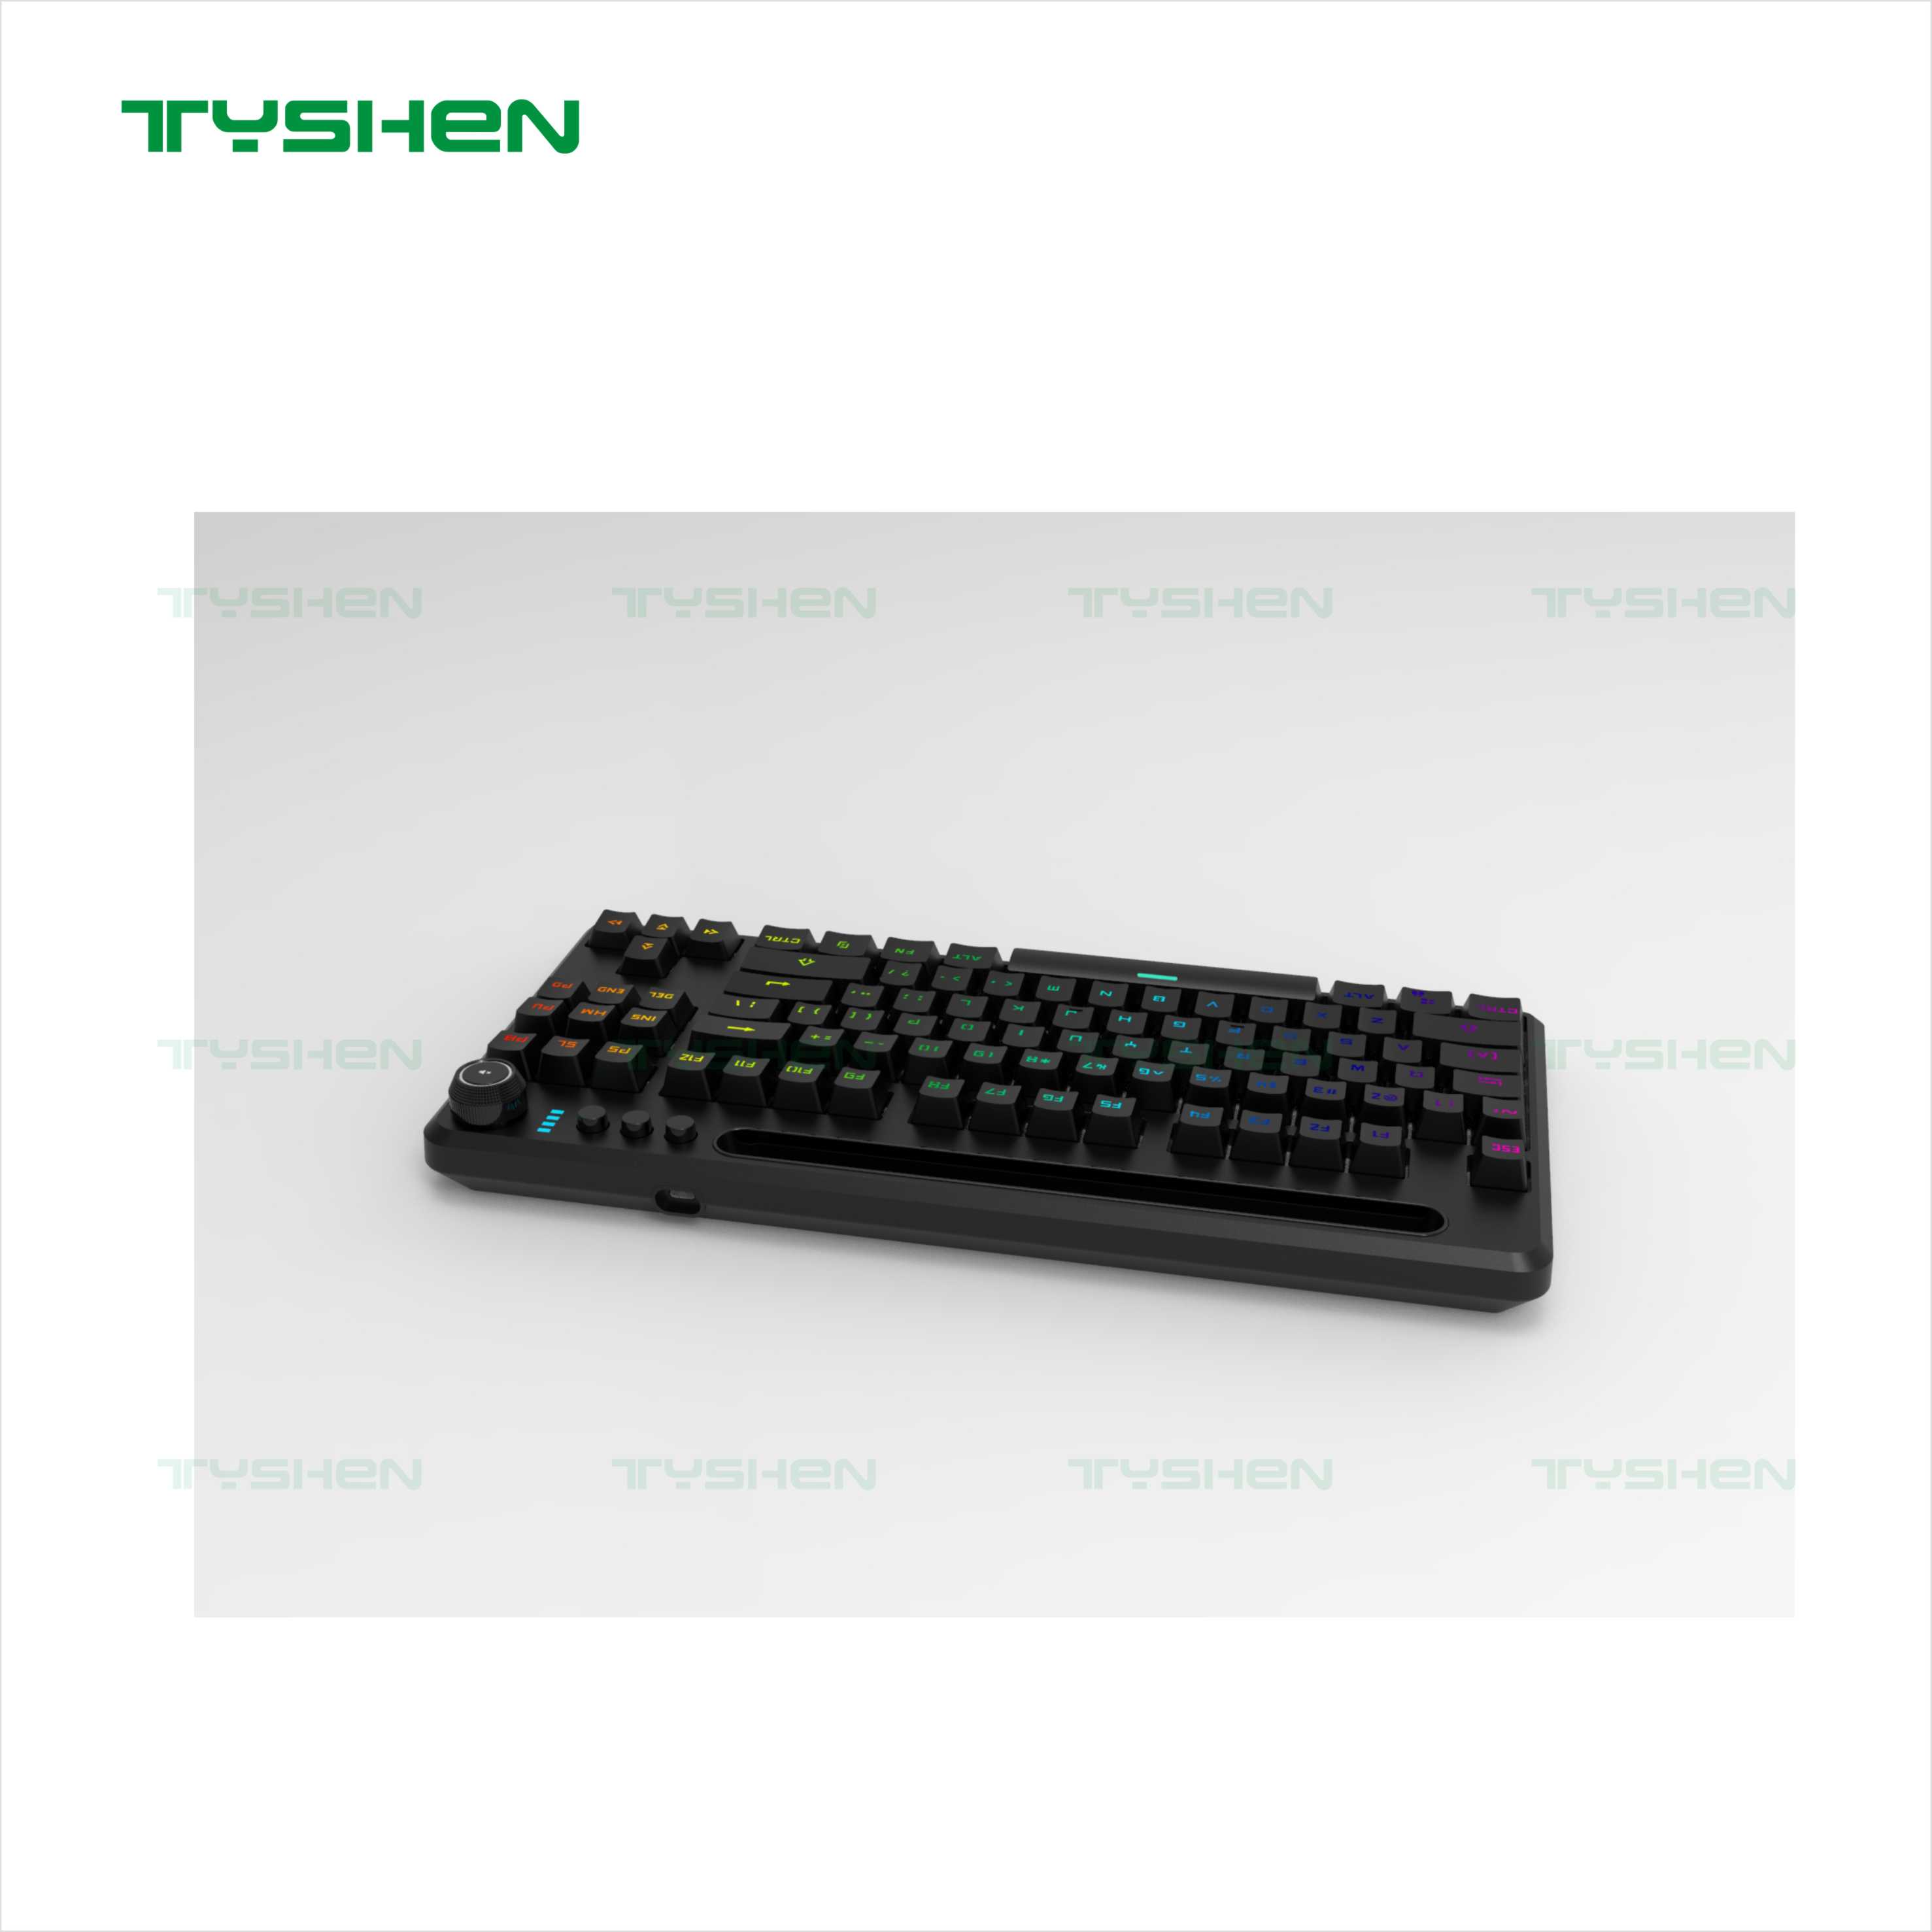 [New Keyboard] Mechanical Green Axis RGB Luminous Game Keyboard Tea Axis 87 Keys Wired Office USB Keyboard